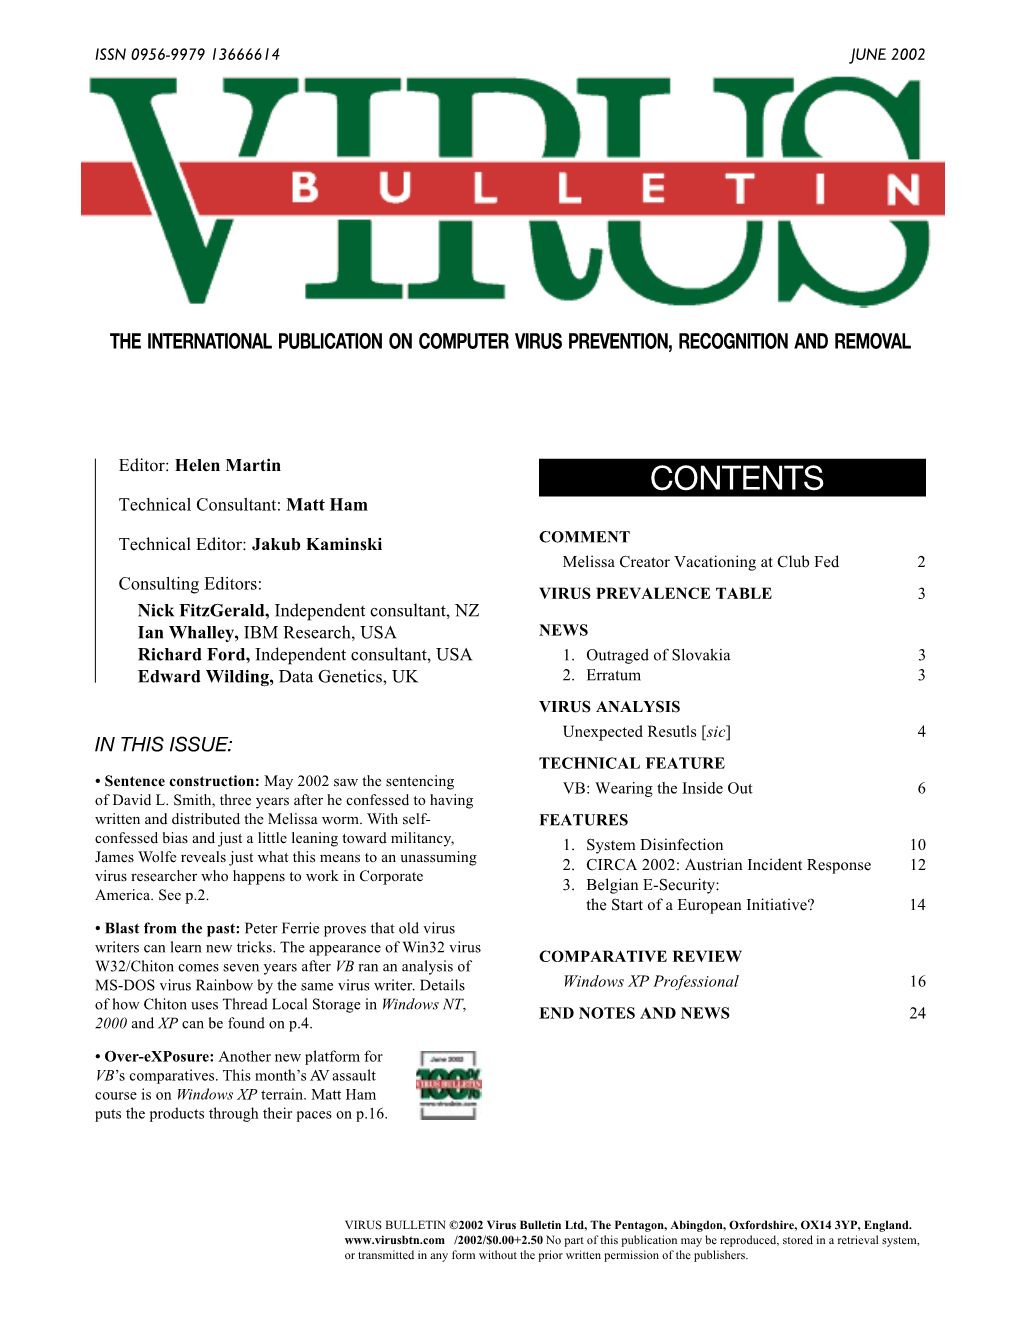 Virus Bulletin, June 2002